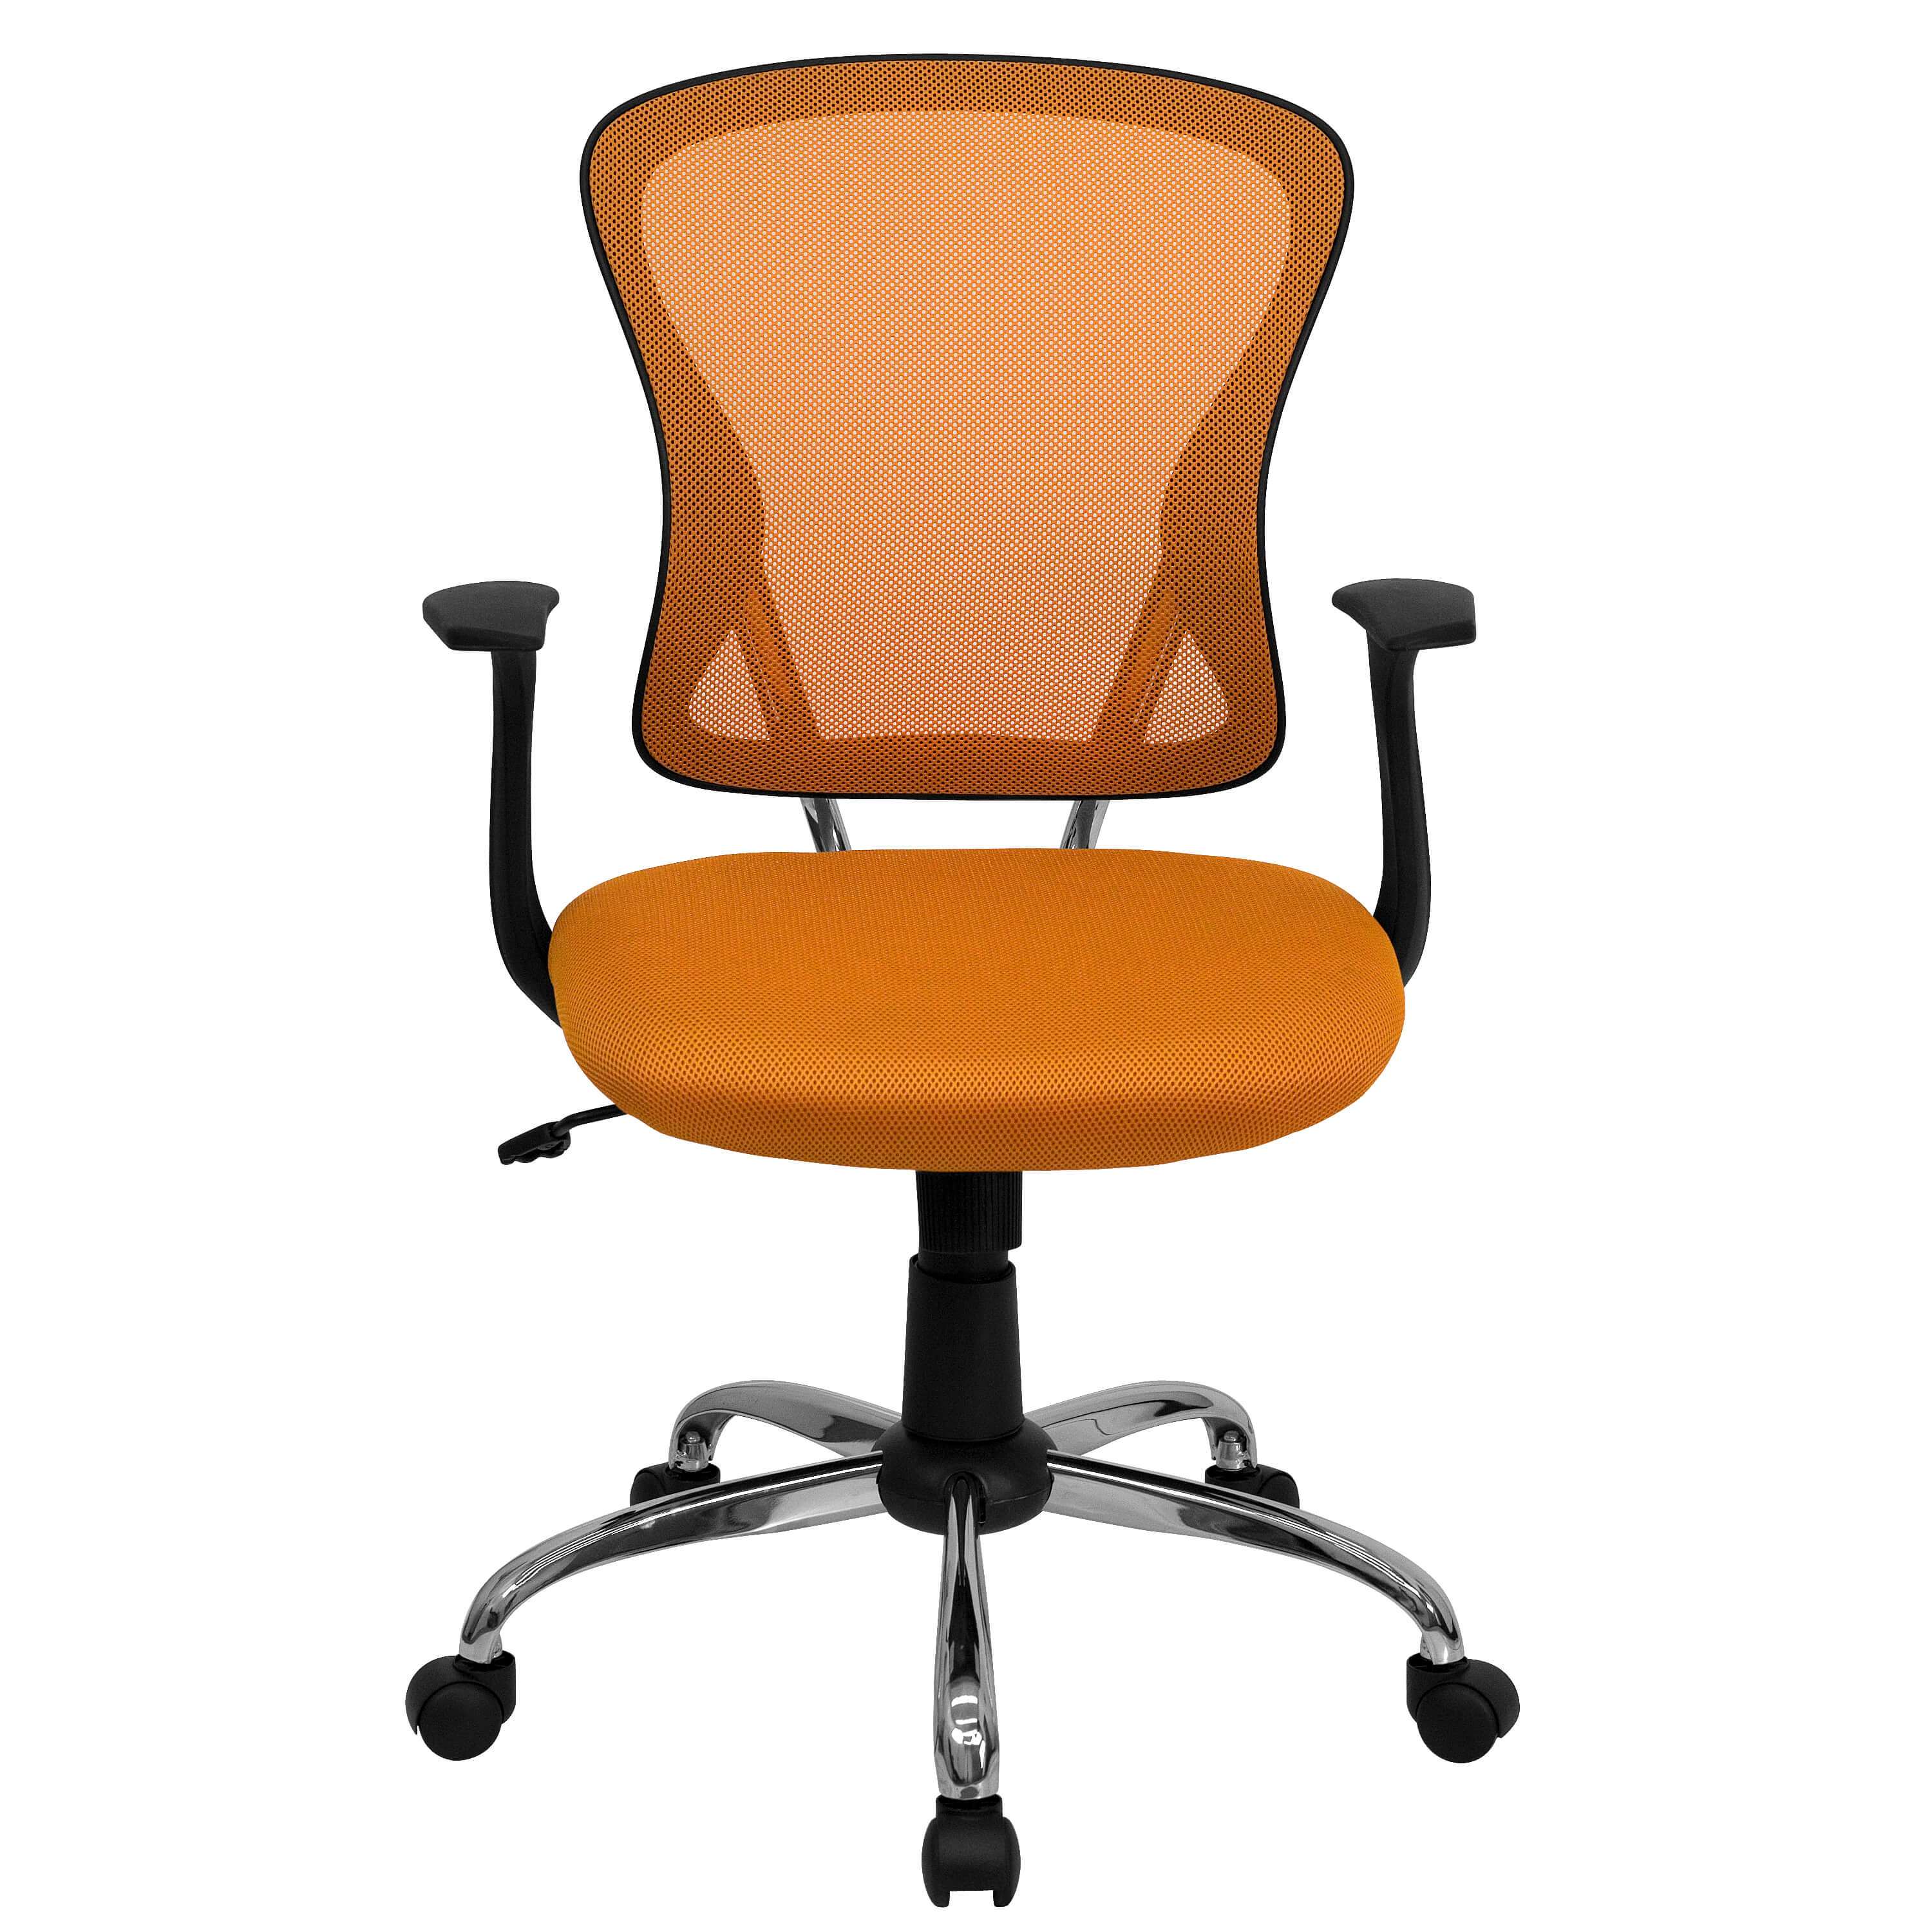 Colorful desk chairs CUB H 8369F ORG GG FLA